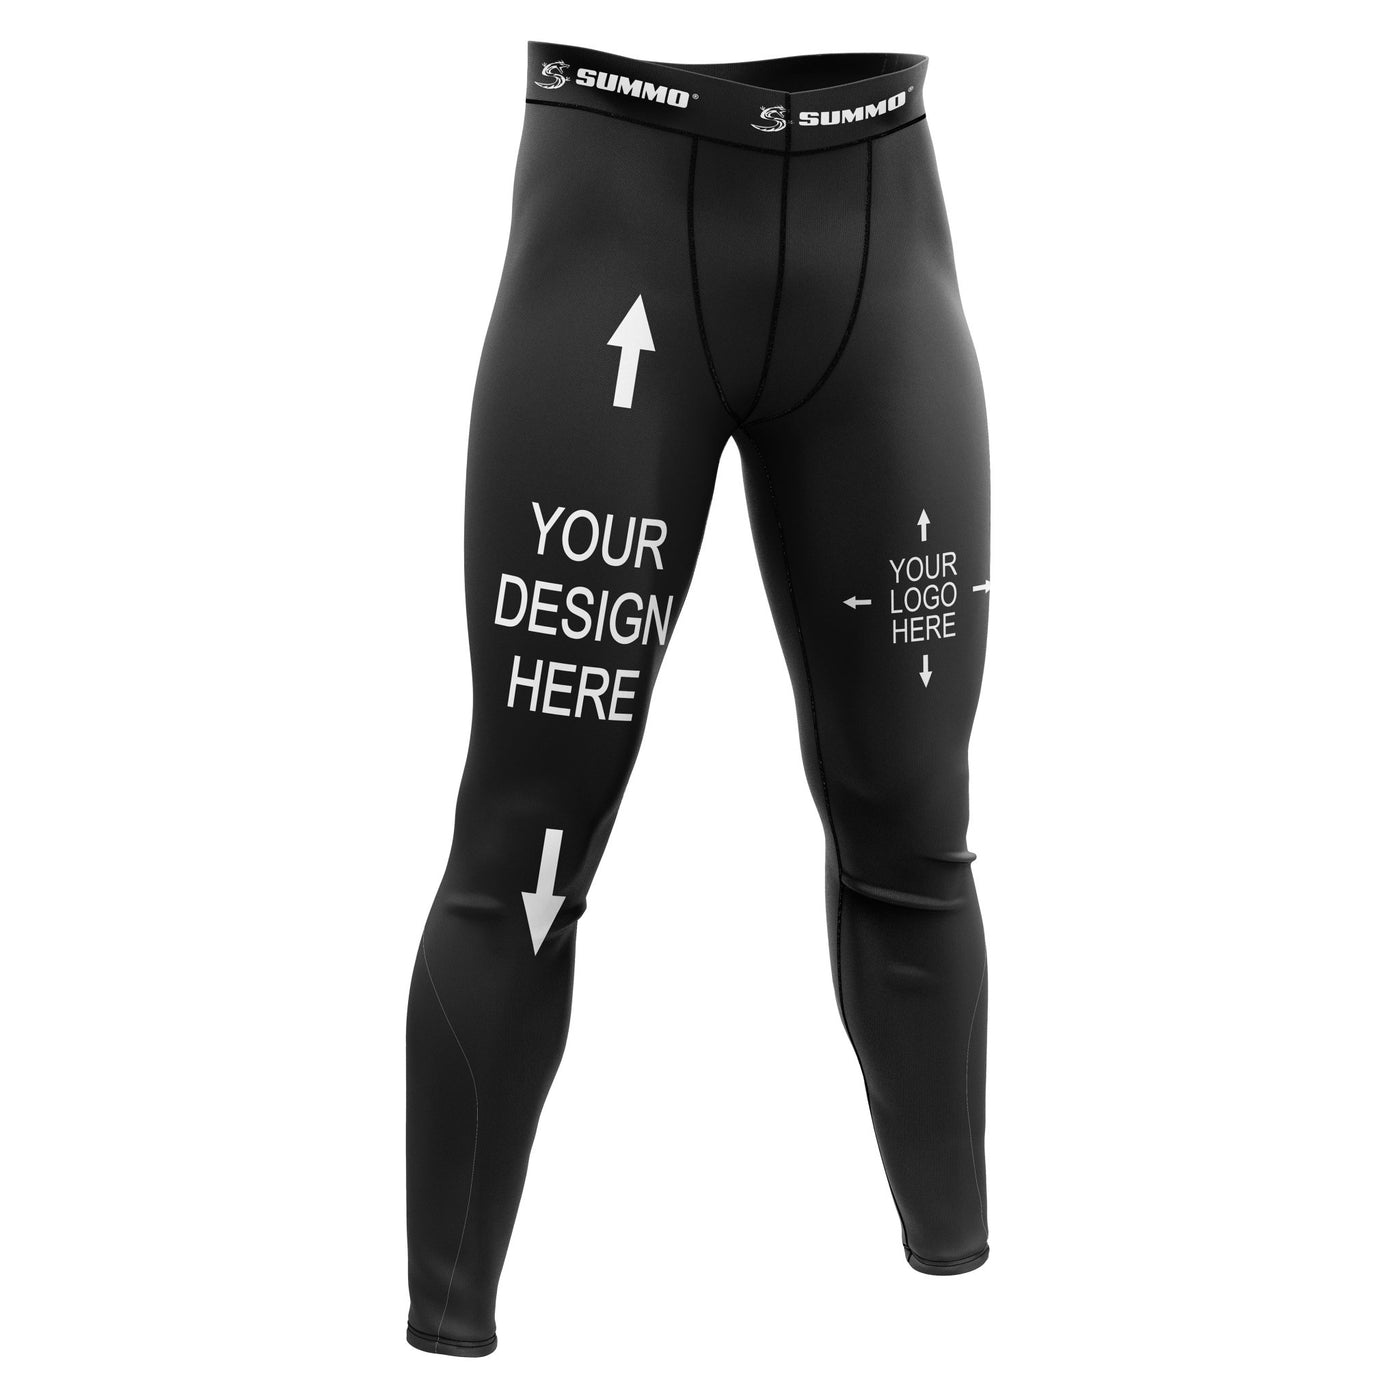 Custom Black Compression Pants - Summo Sports